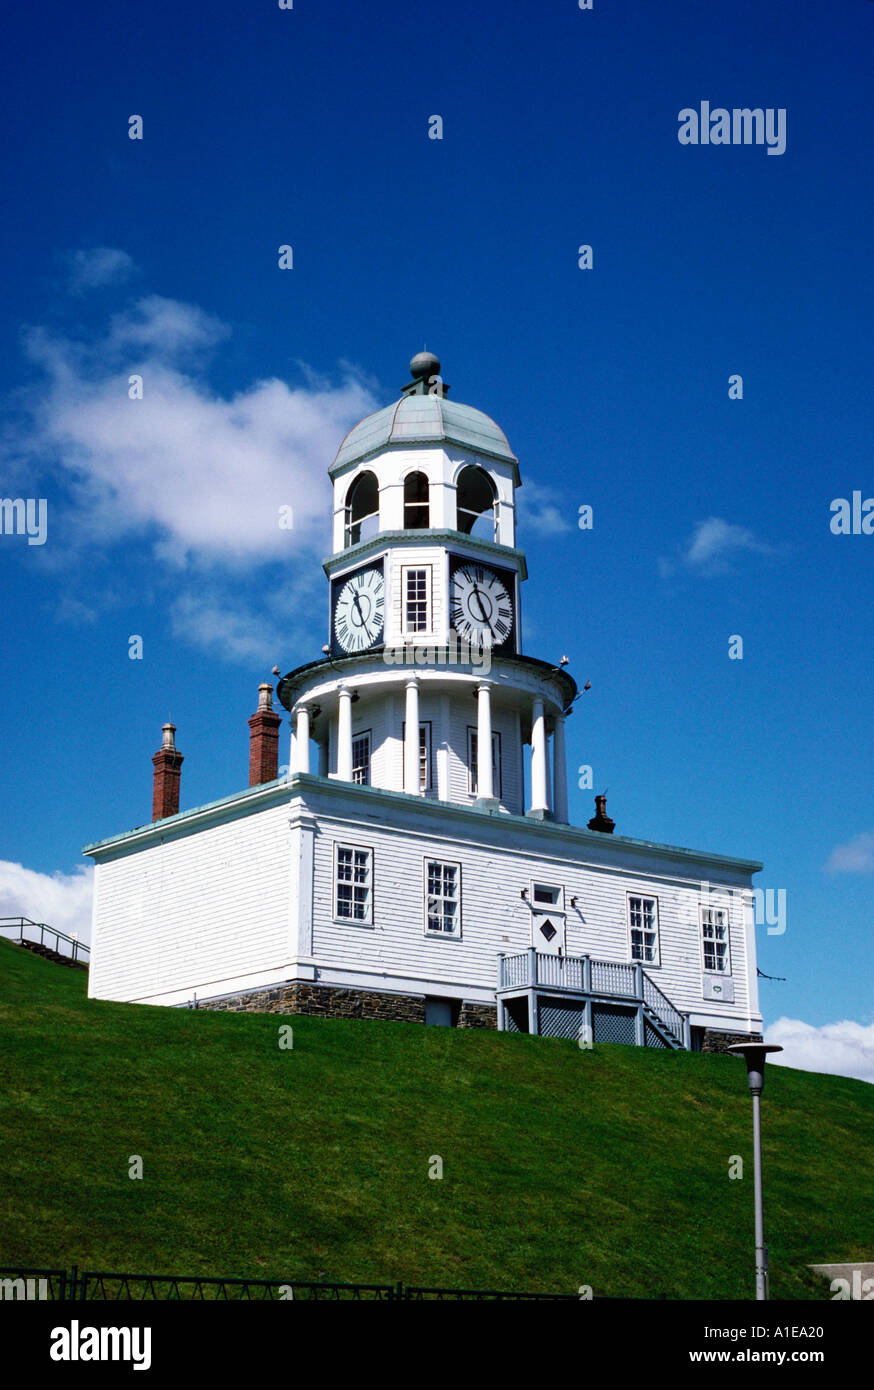 Citadel clock Halifax Nova Scotia extensive collection of Nova Scotia images available  Stock Photo